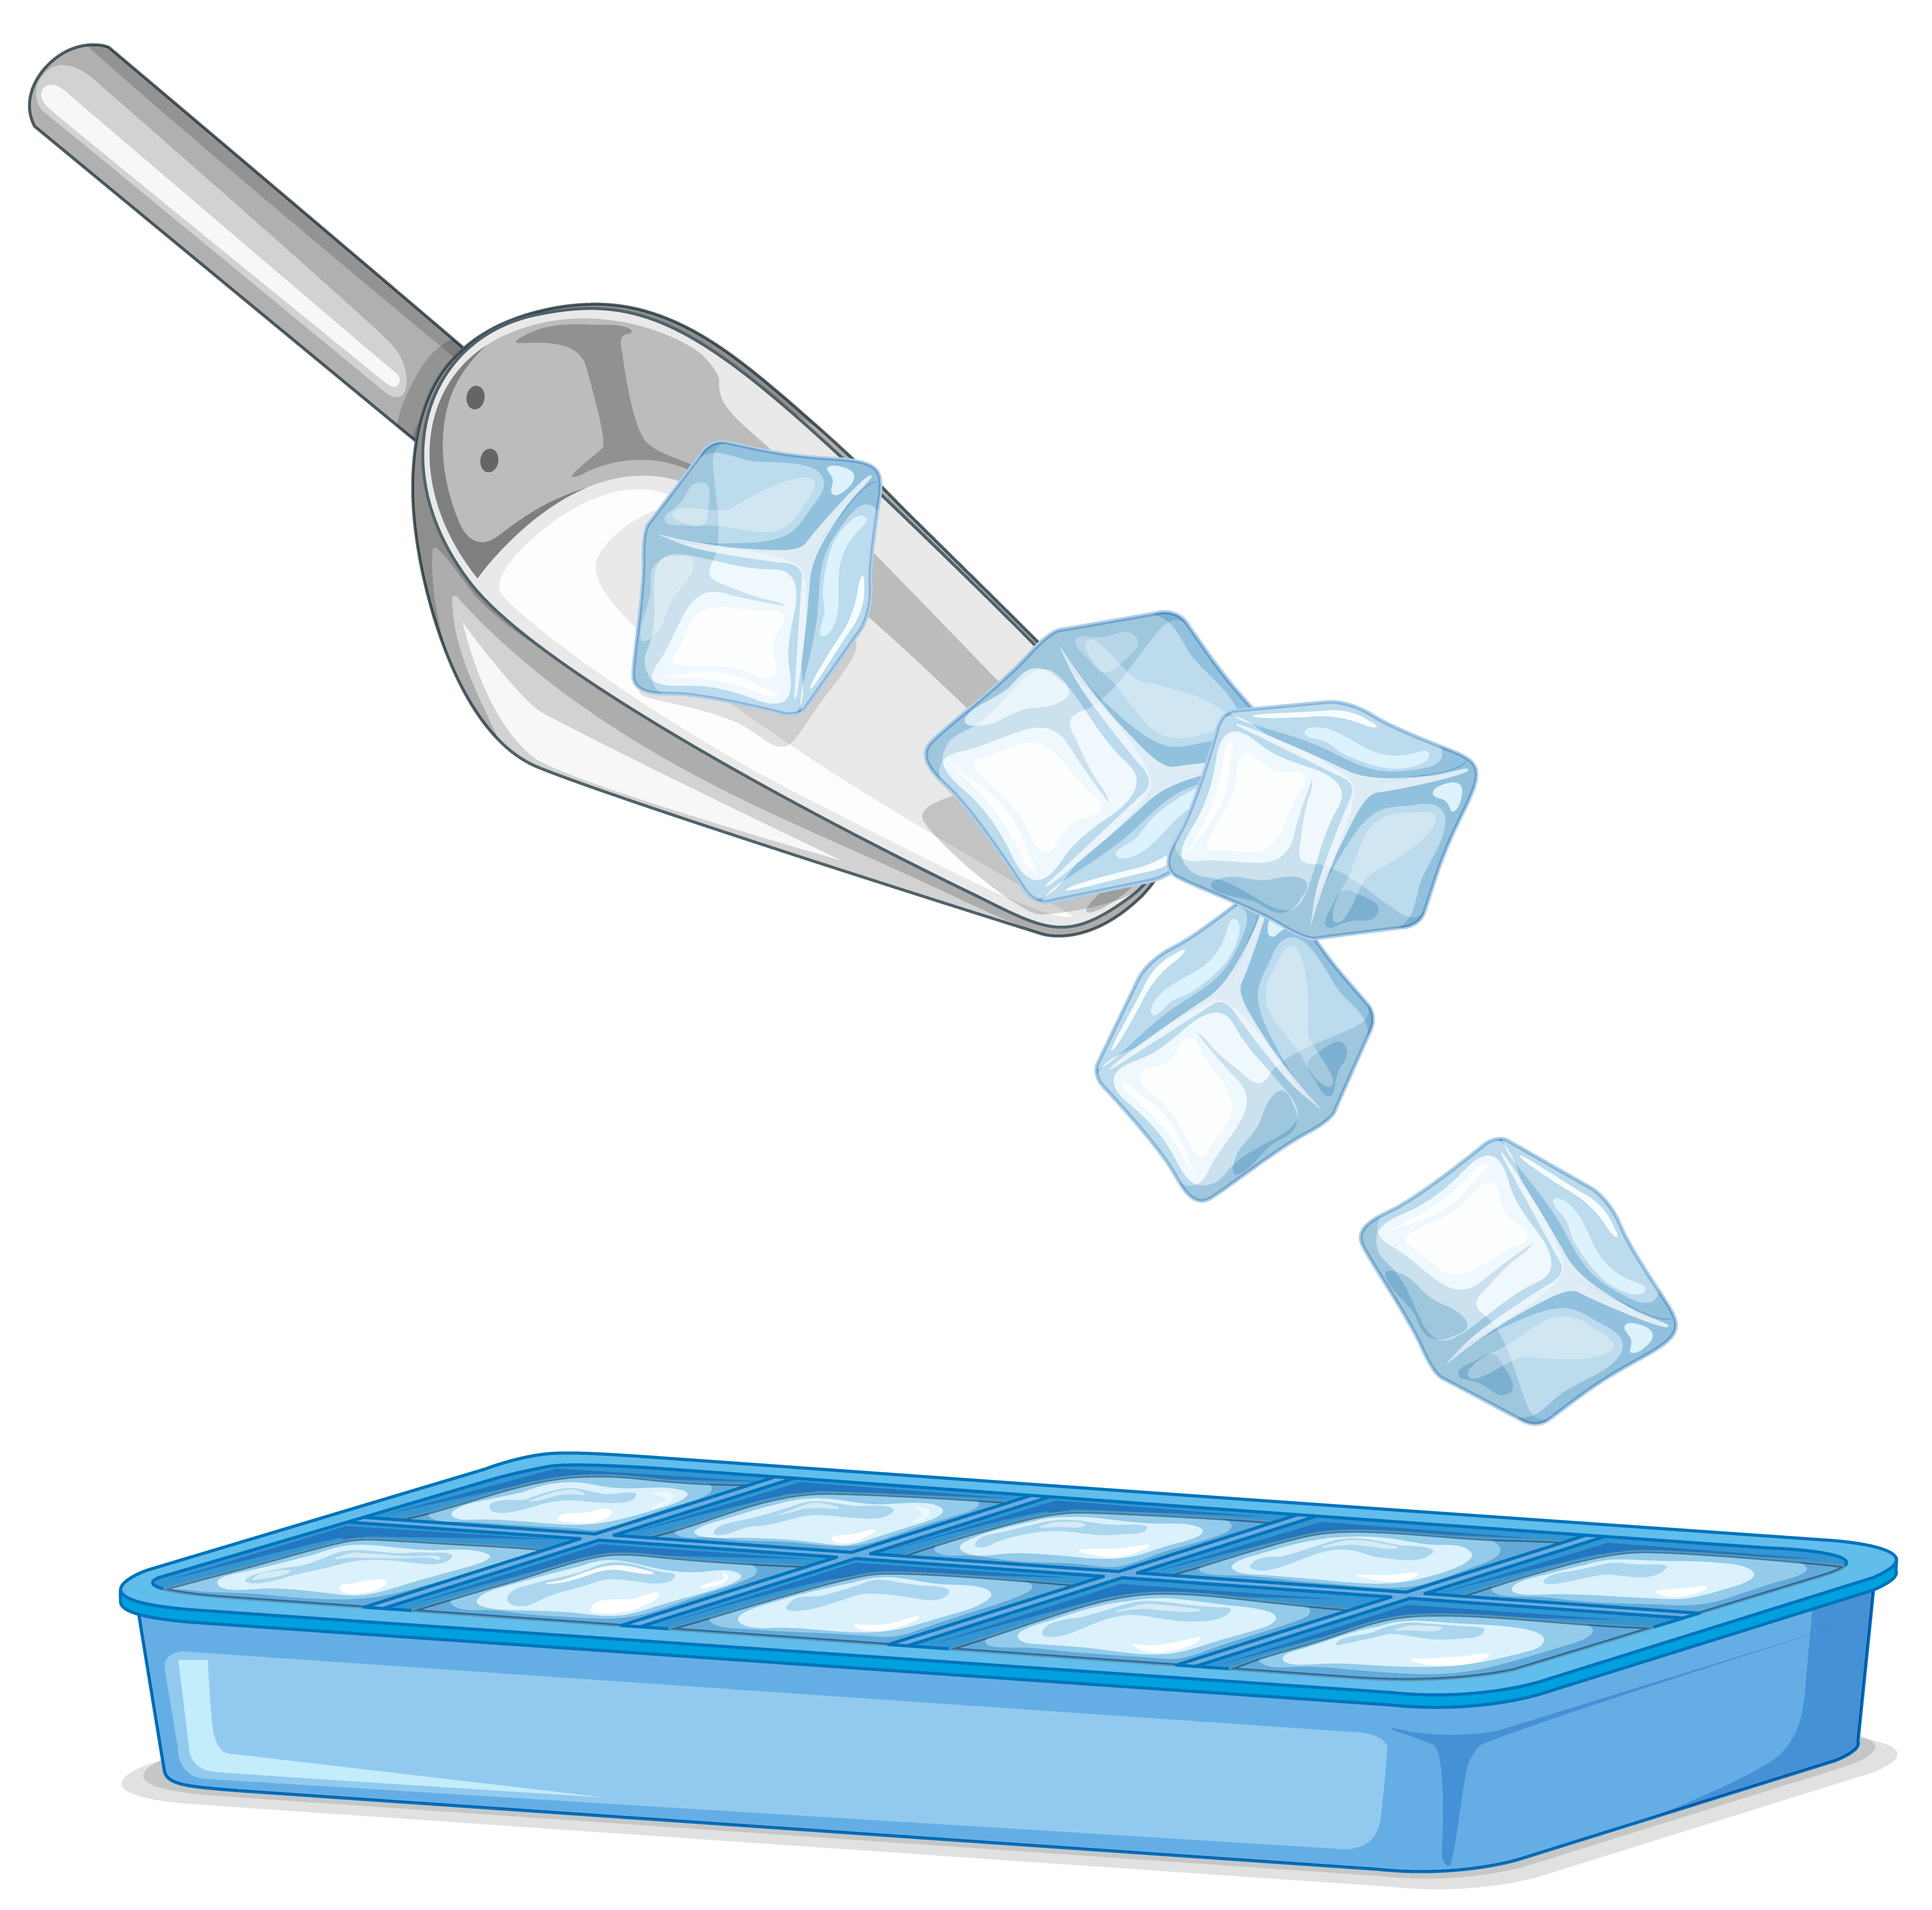 Visual description of ice cubes.